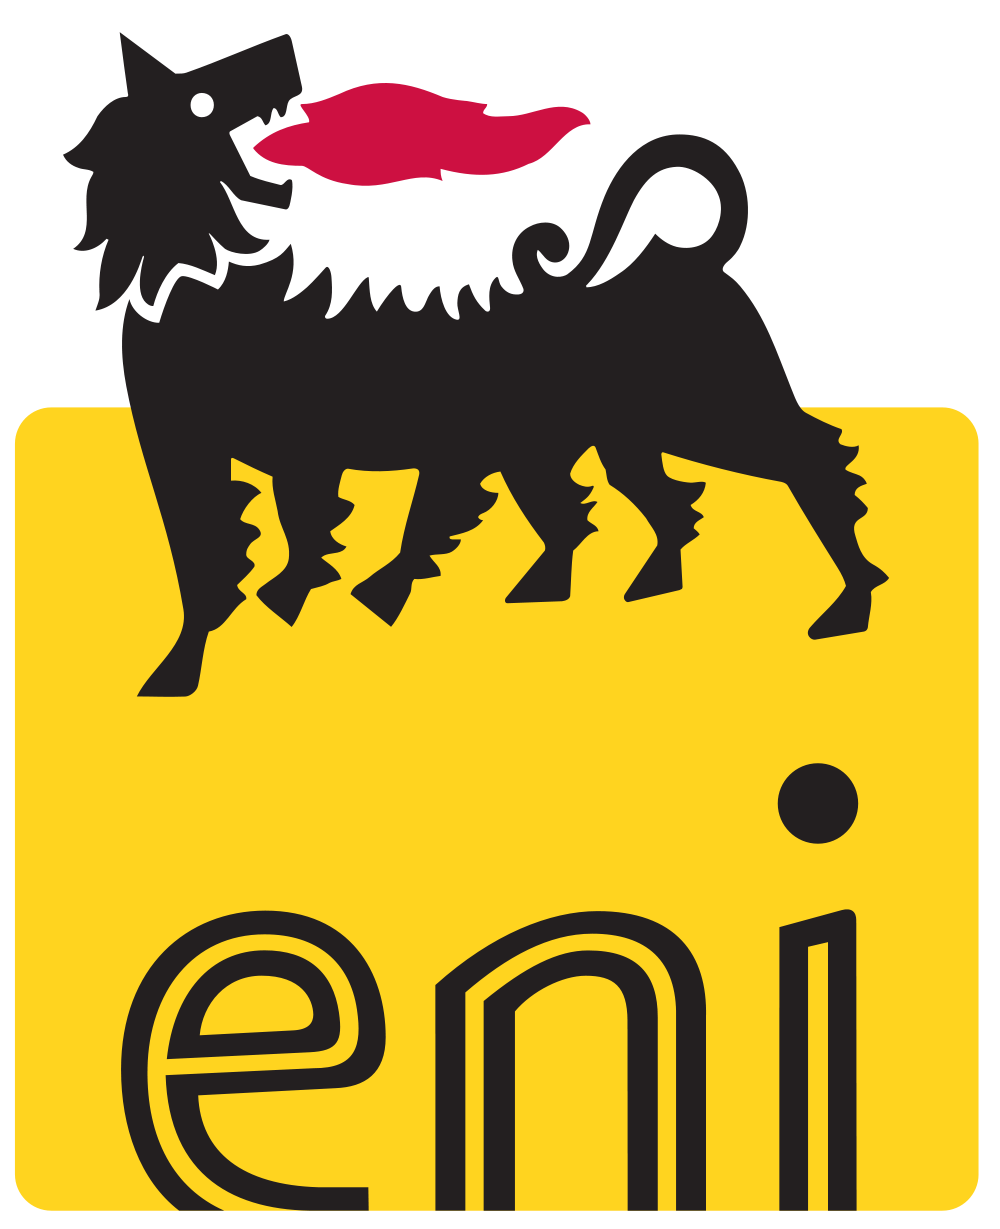 Eni Logo.png - Eni, Transparent background PNG HD thumbnail